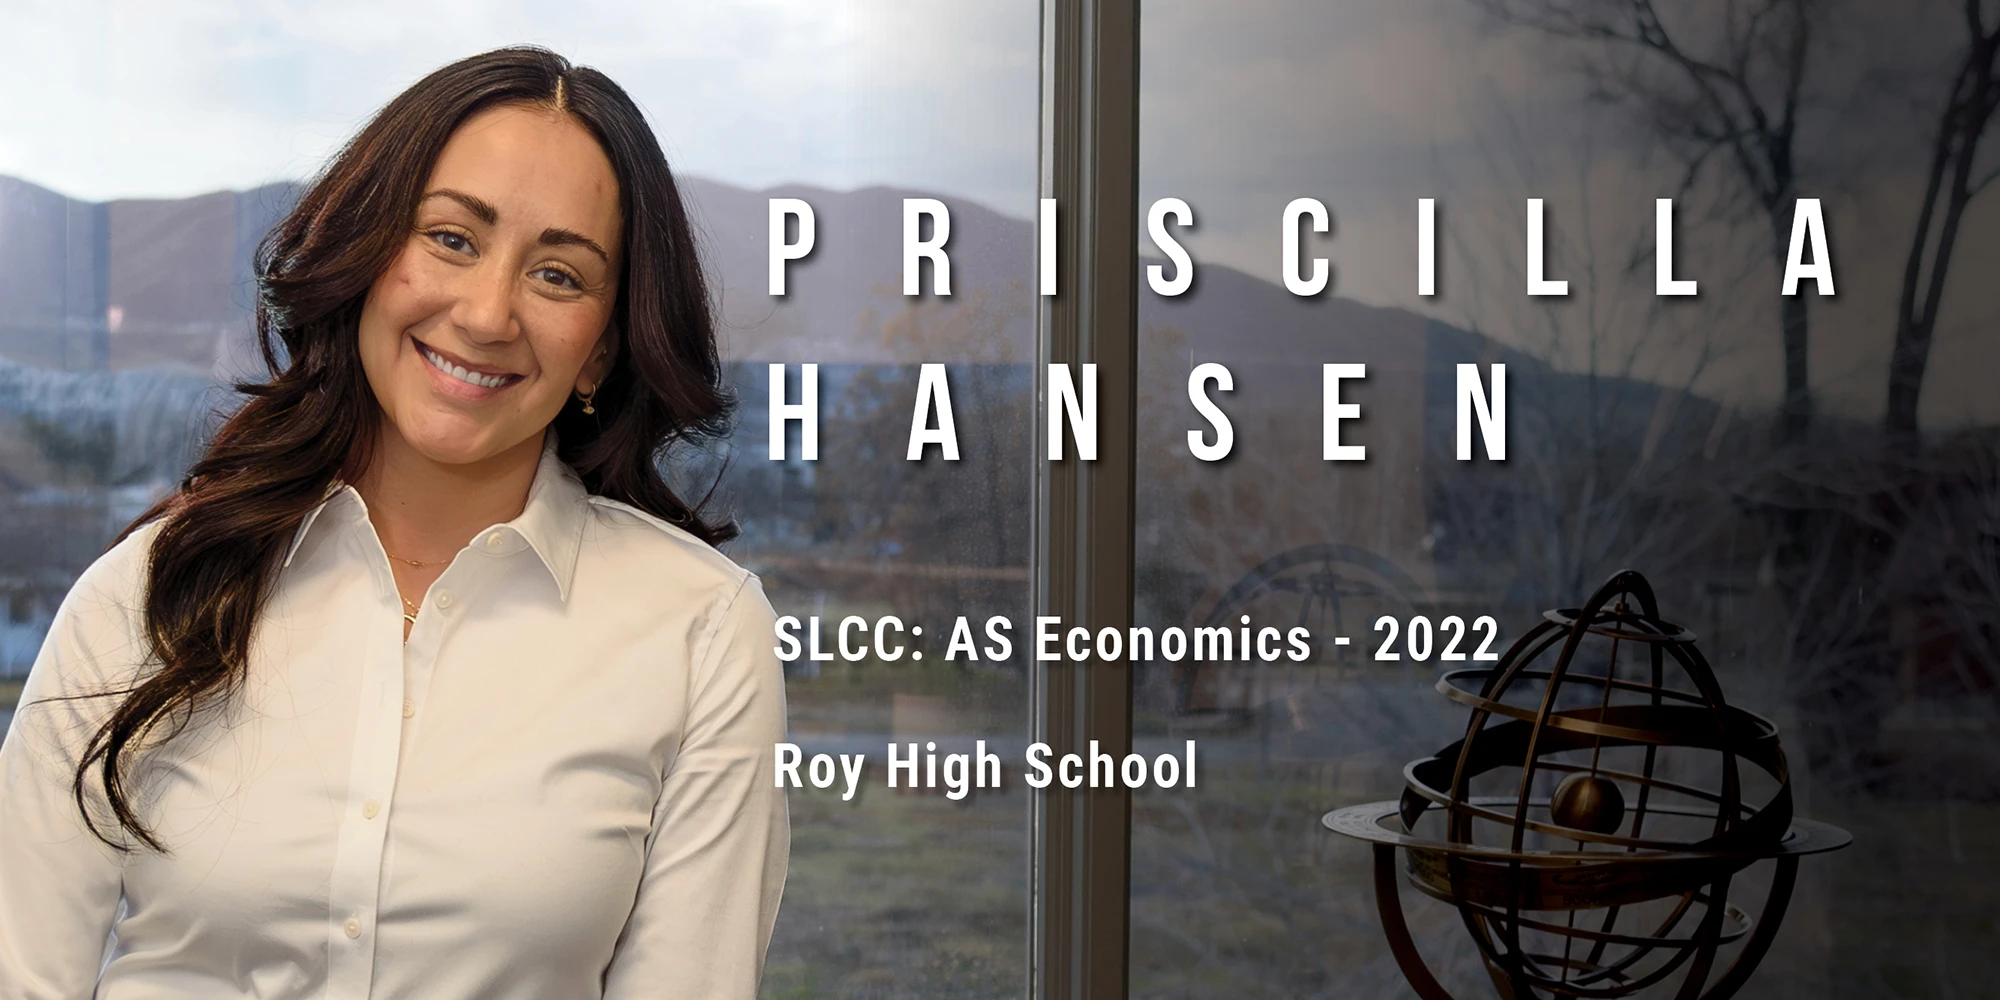 Priscilla Hansen, SLCC AS Economics in 2022, From Roy High School